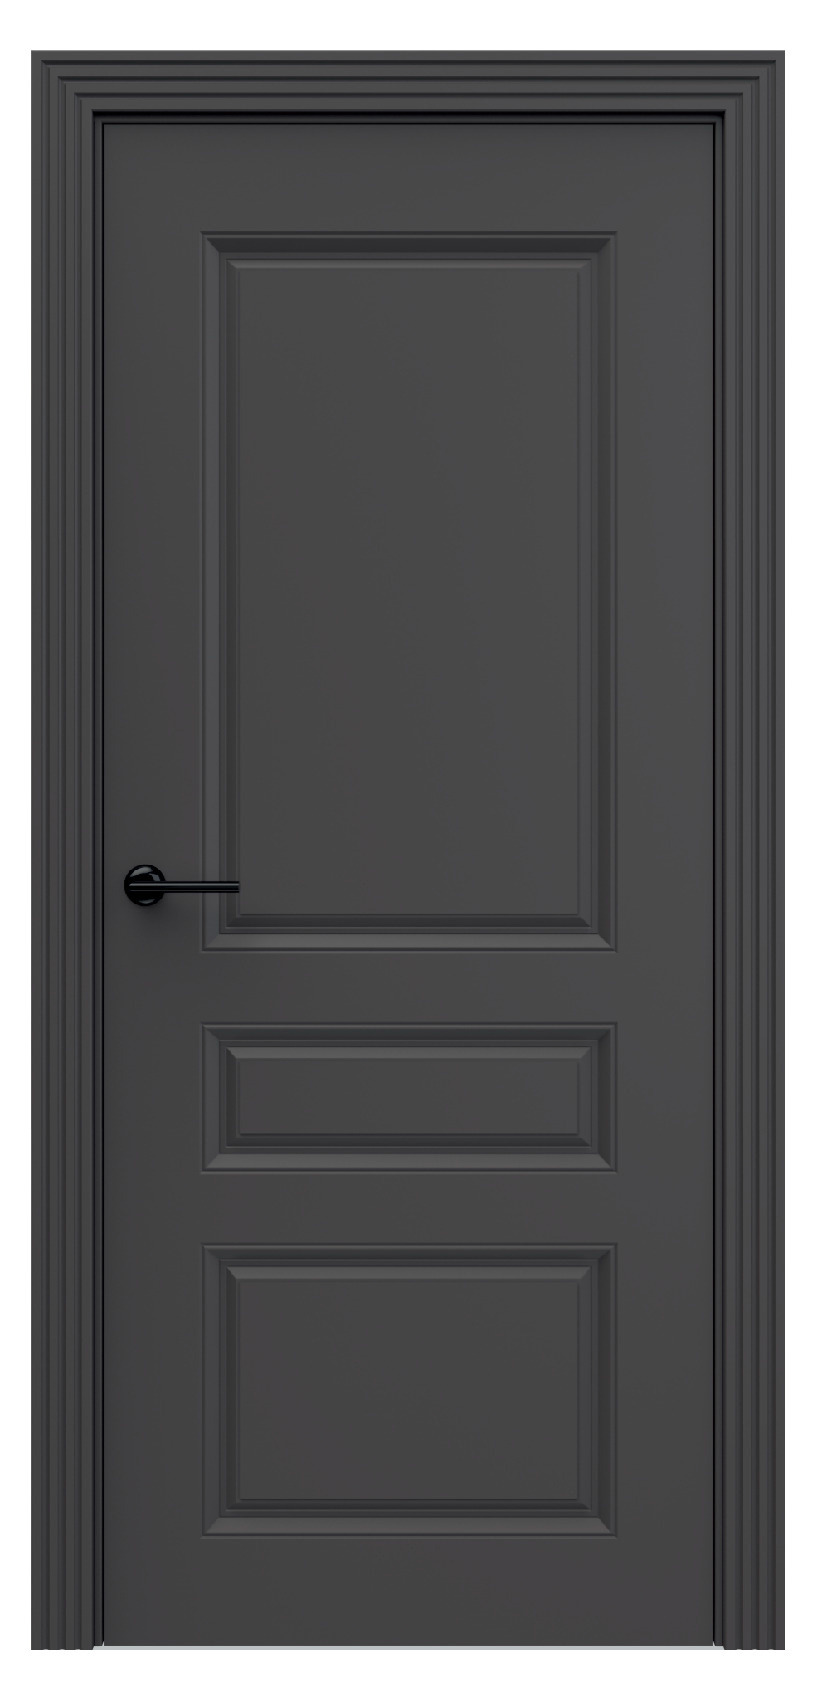 Questdoors Межкомнатная дверь QE3, арт. 17940 - фото №1